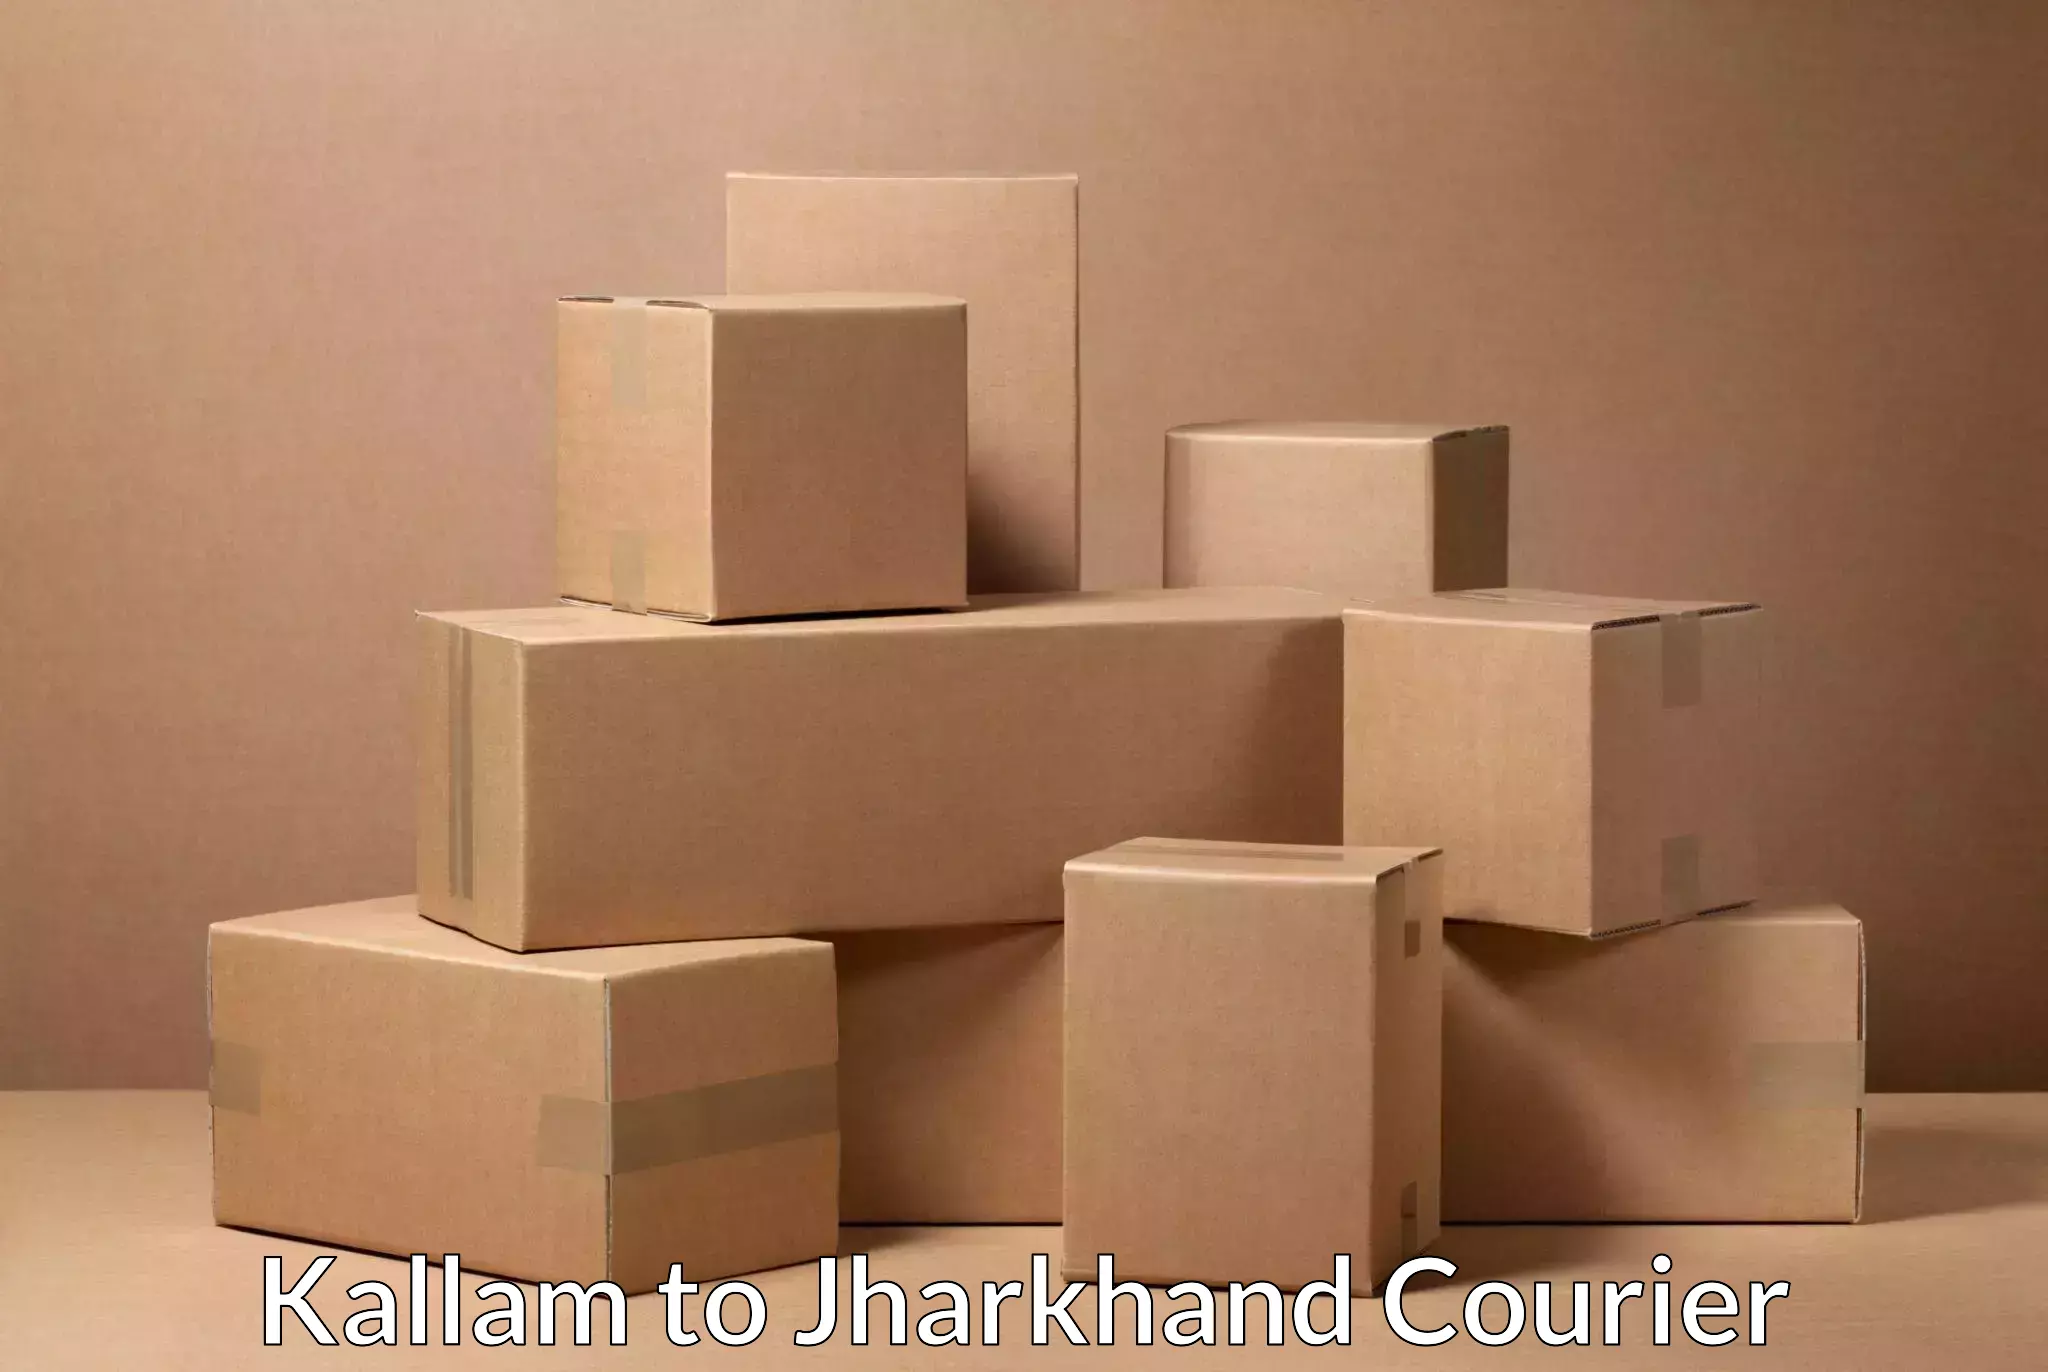 Courier service comparison Kallam to Jharkhand